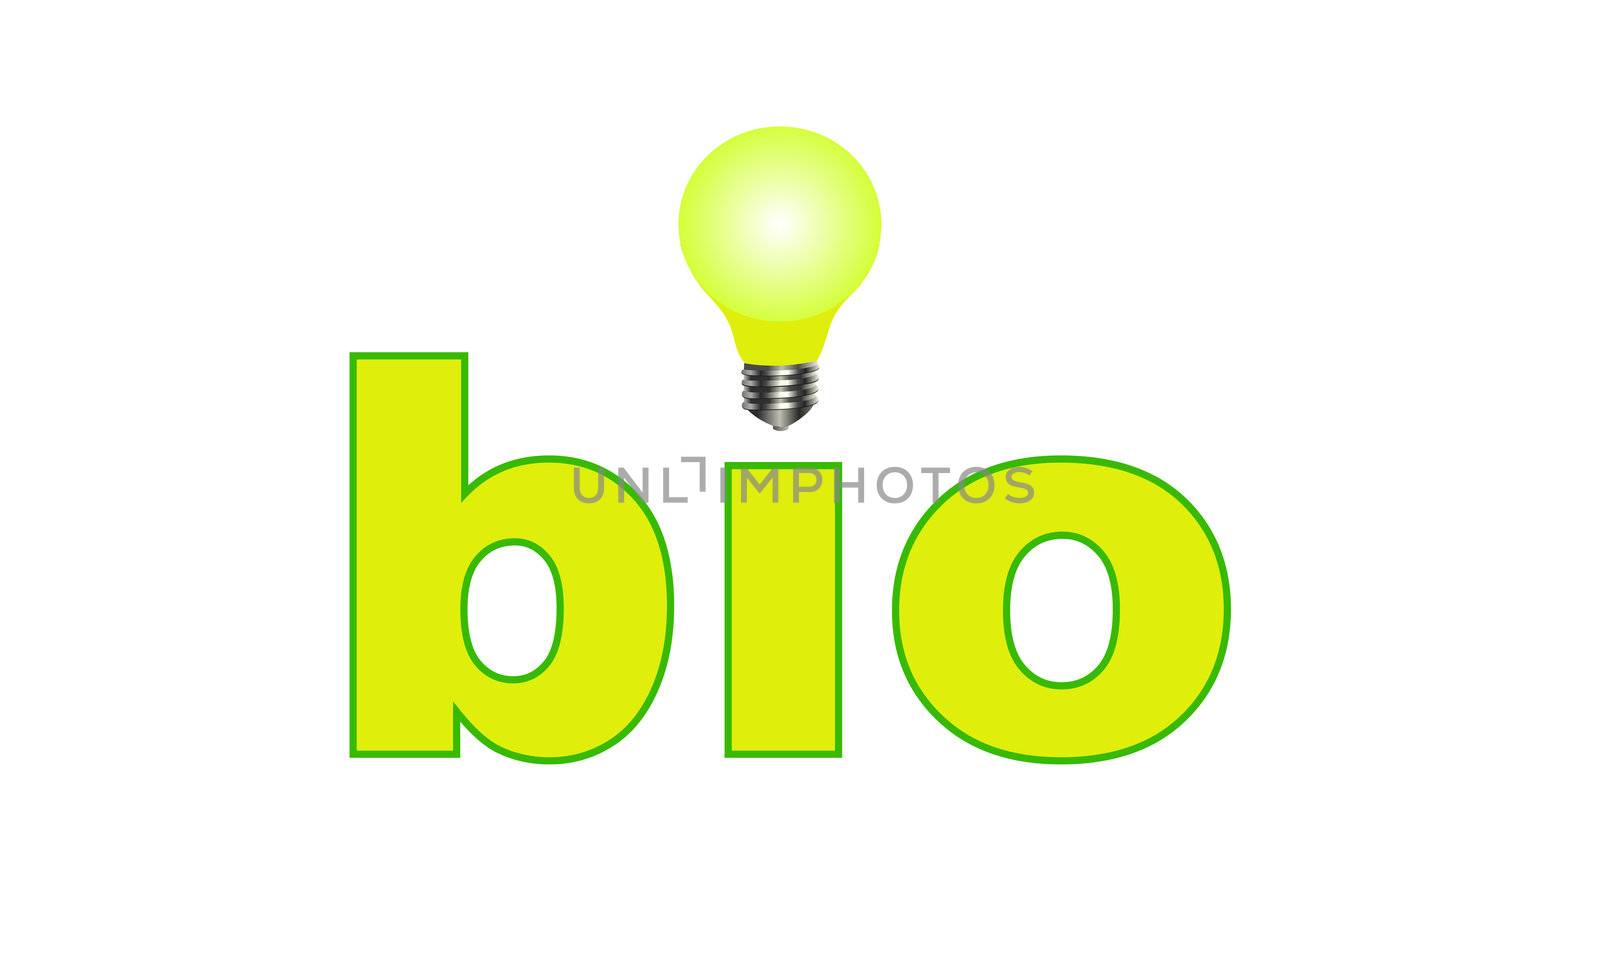 Bio eco friendly logo